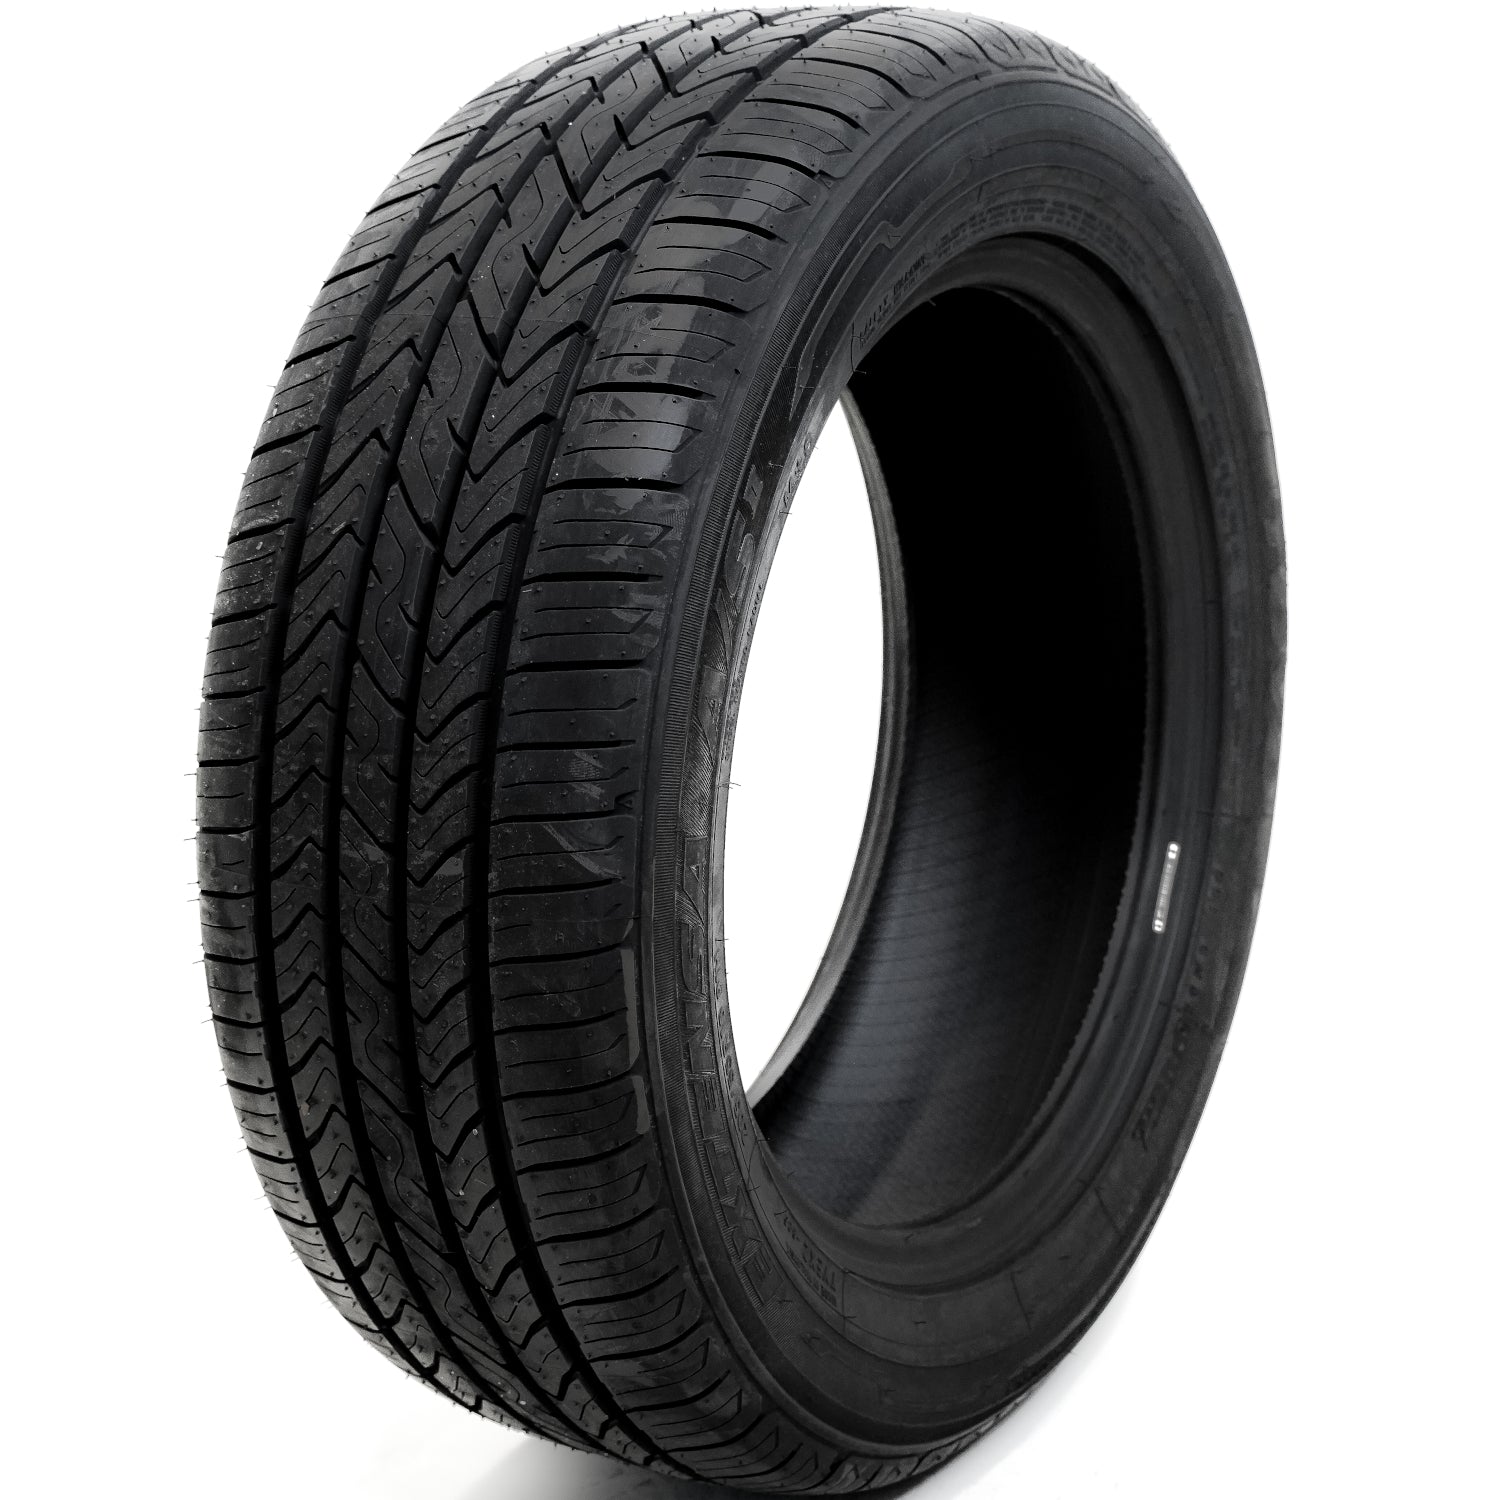 TOYO TIRES EXTENSA A/S II 235/55R17 (27.2X9.3R 17) Tires